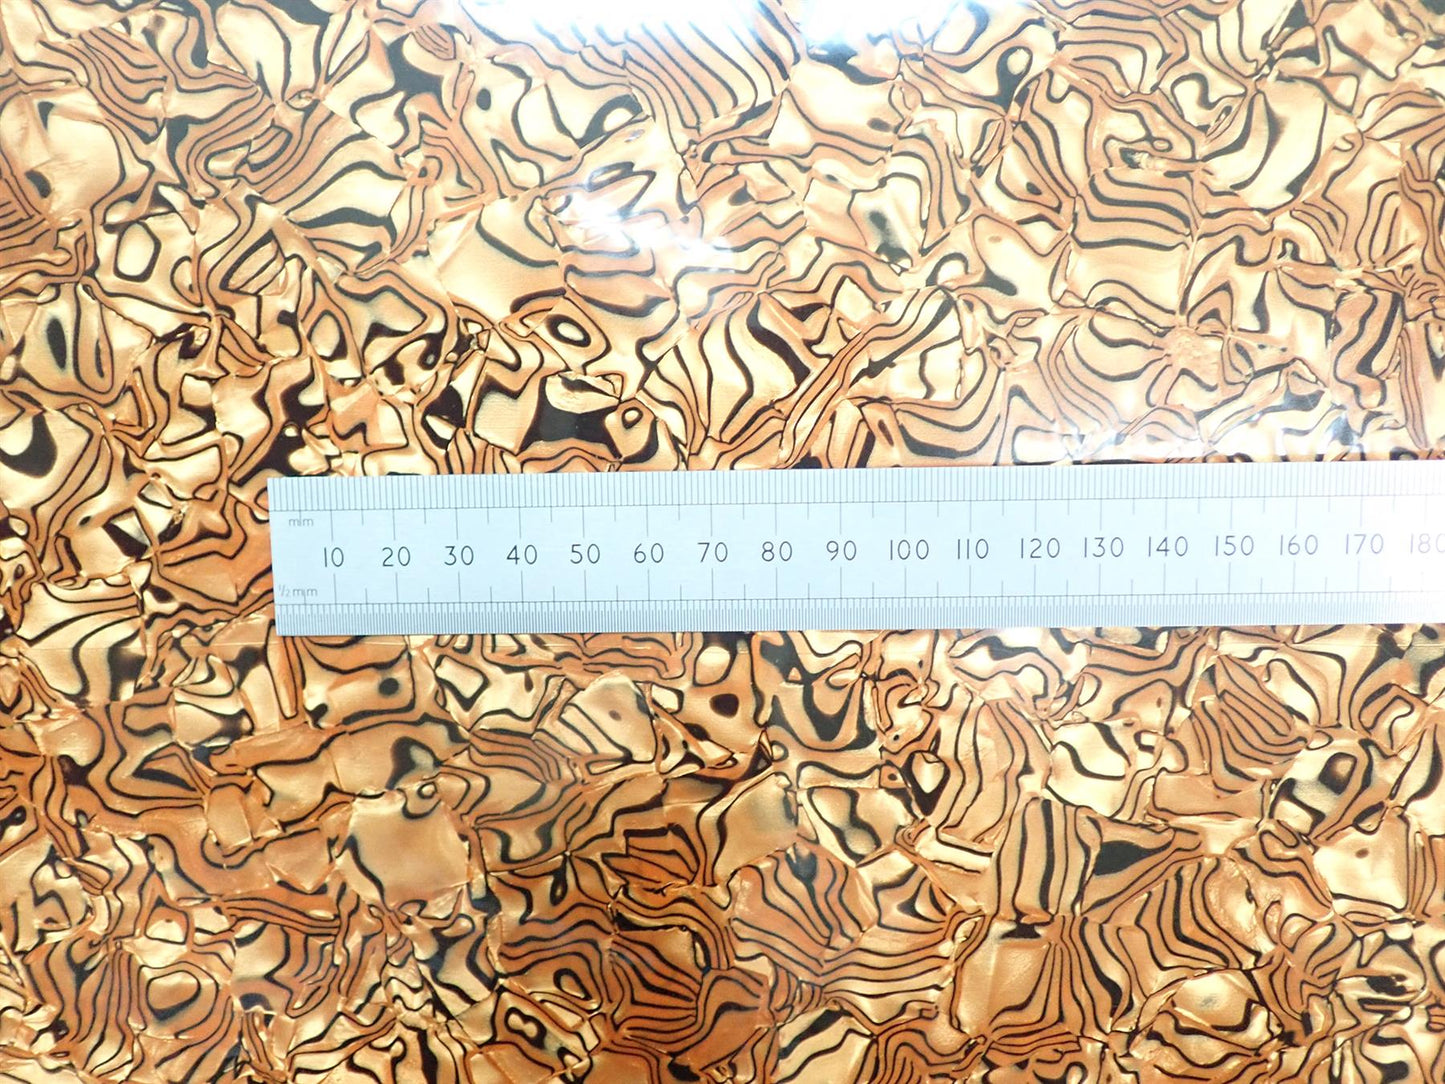 Incudo Warm Brown Tiger Shell Celluloid Veneer / Wrap - 1600x700x0.17mm (63x27.56x0.007")